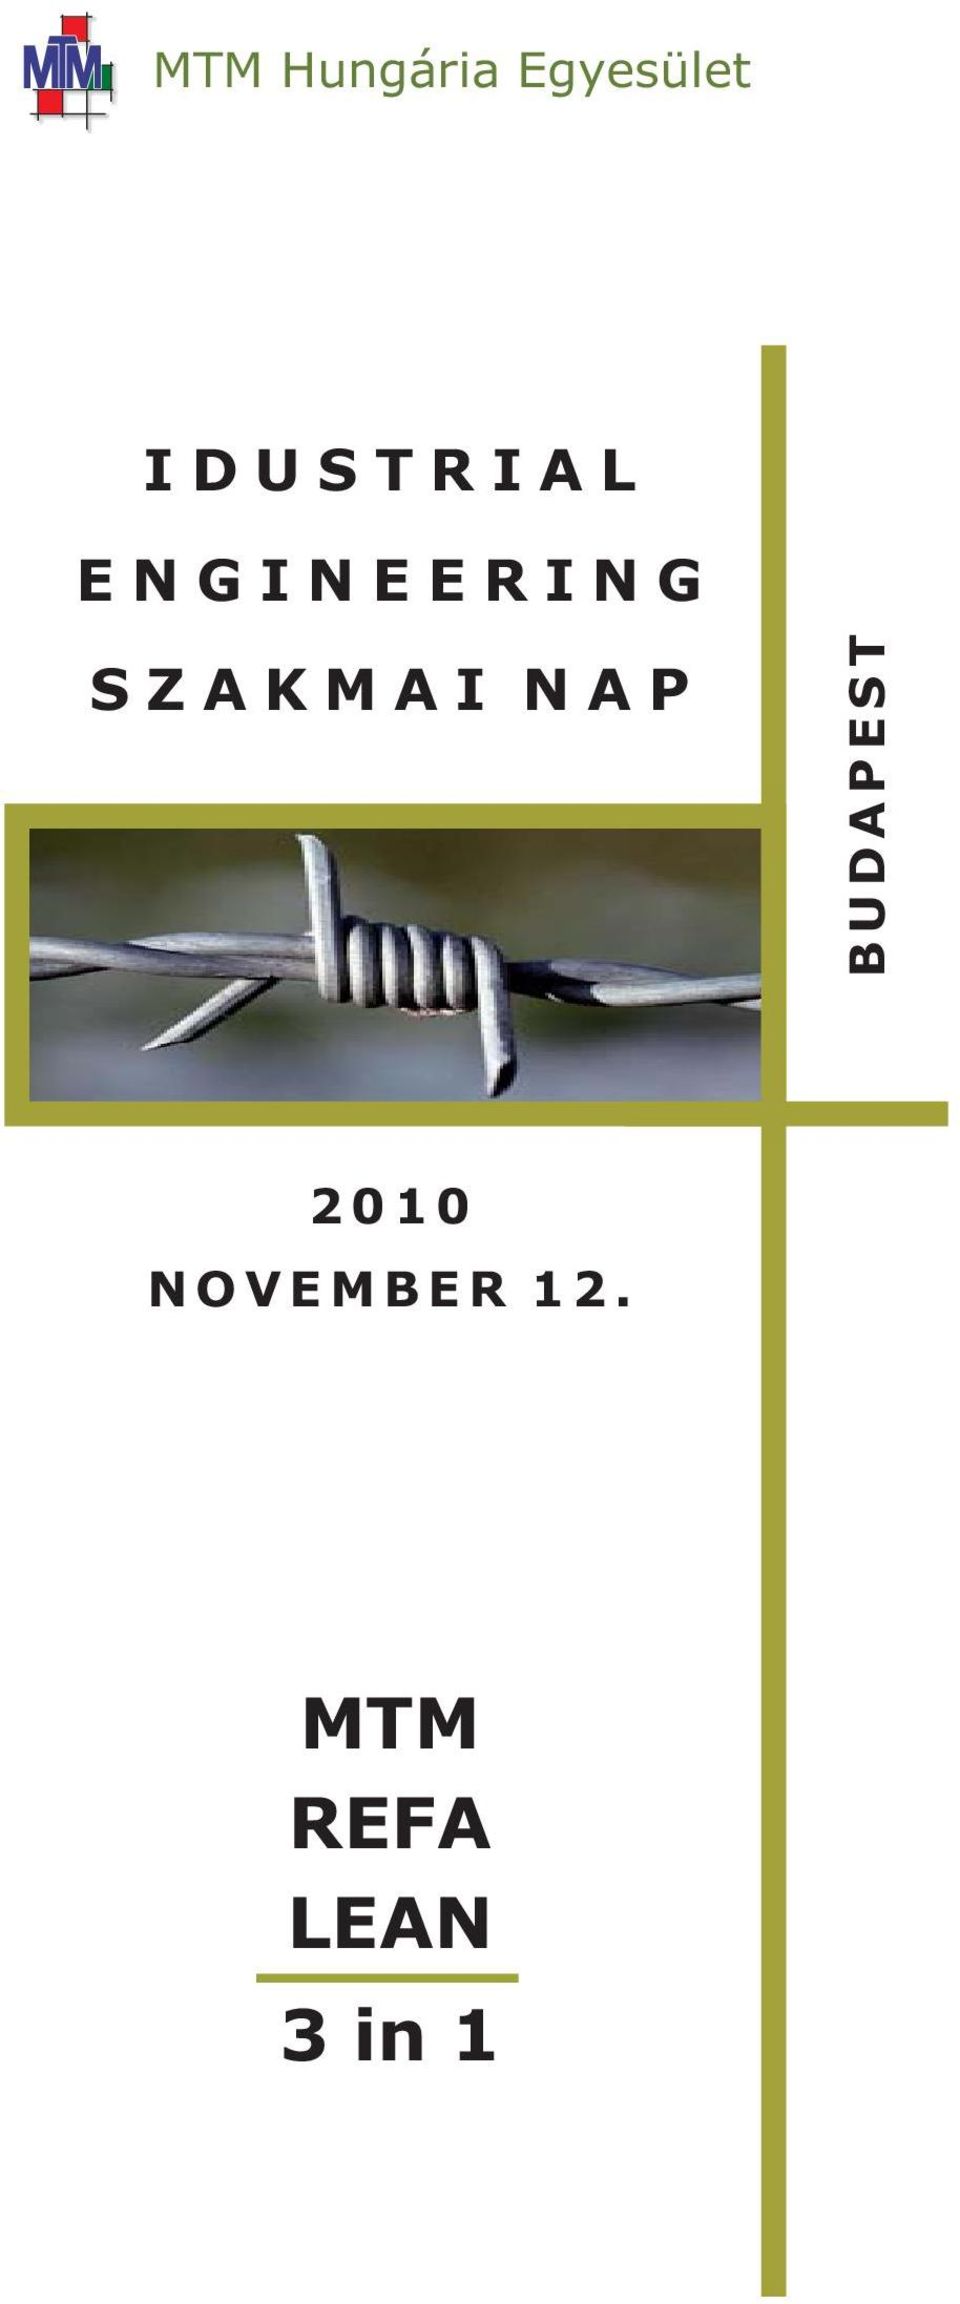 SZAKMAI NAP BUDAPEST 2010